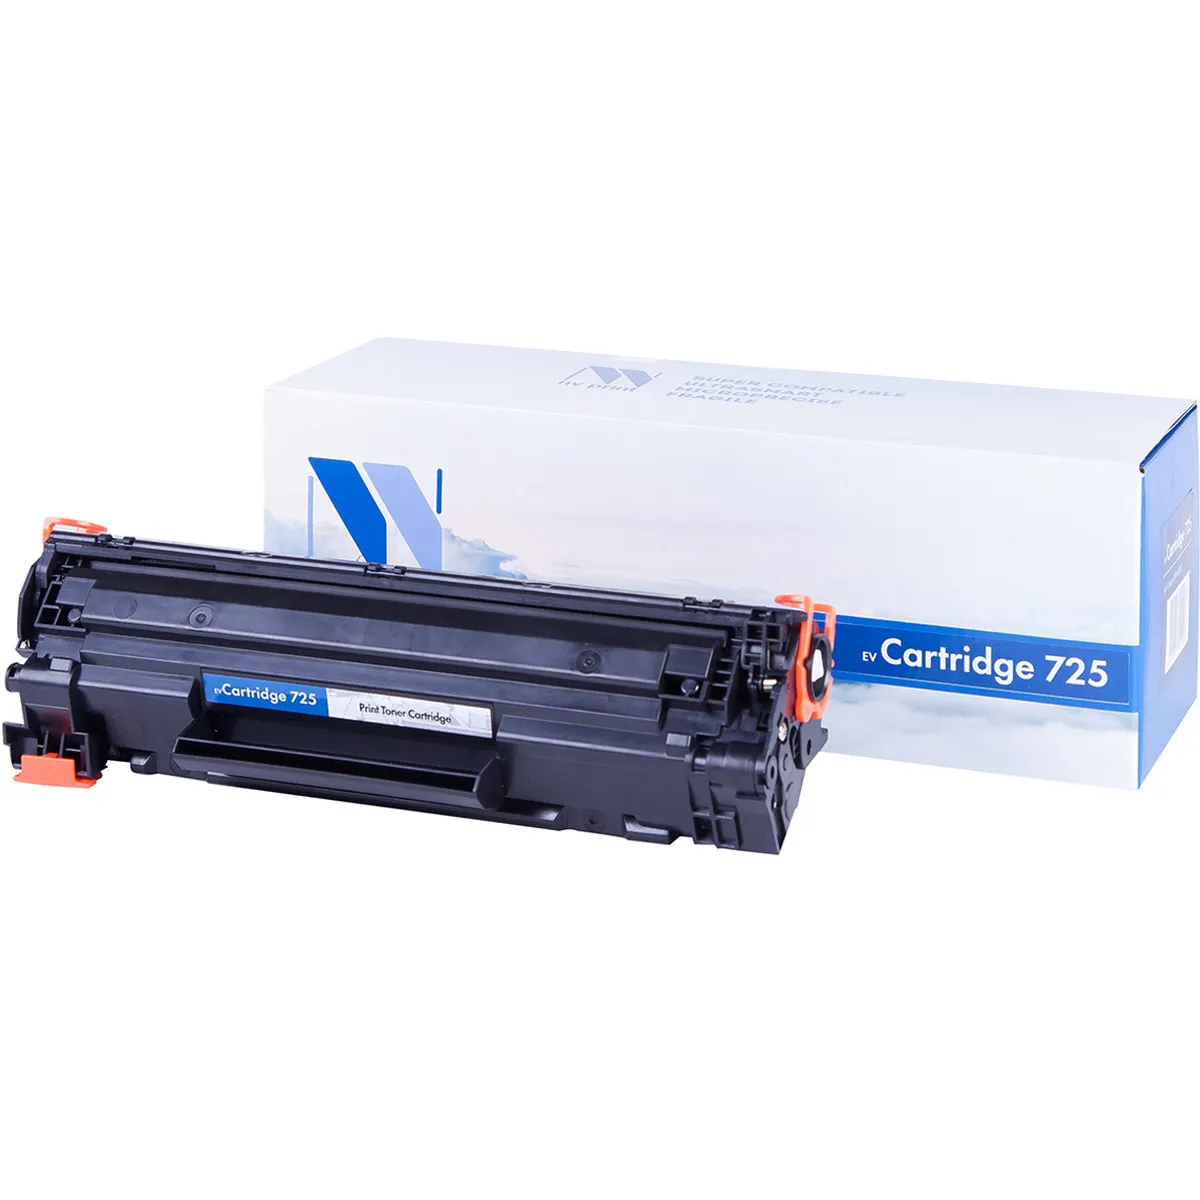 Mos keladigan printer kartridji NV-CB435A/CB436A/CE285A/CE278A/NV-725#1